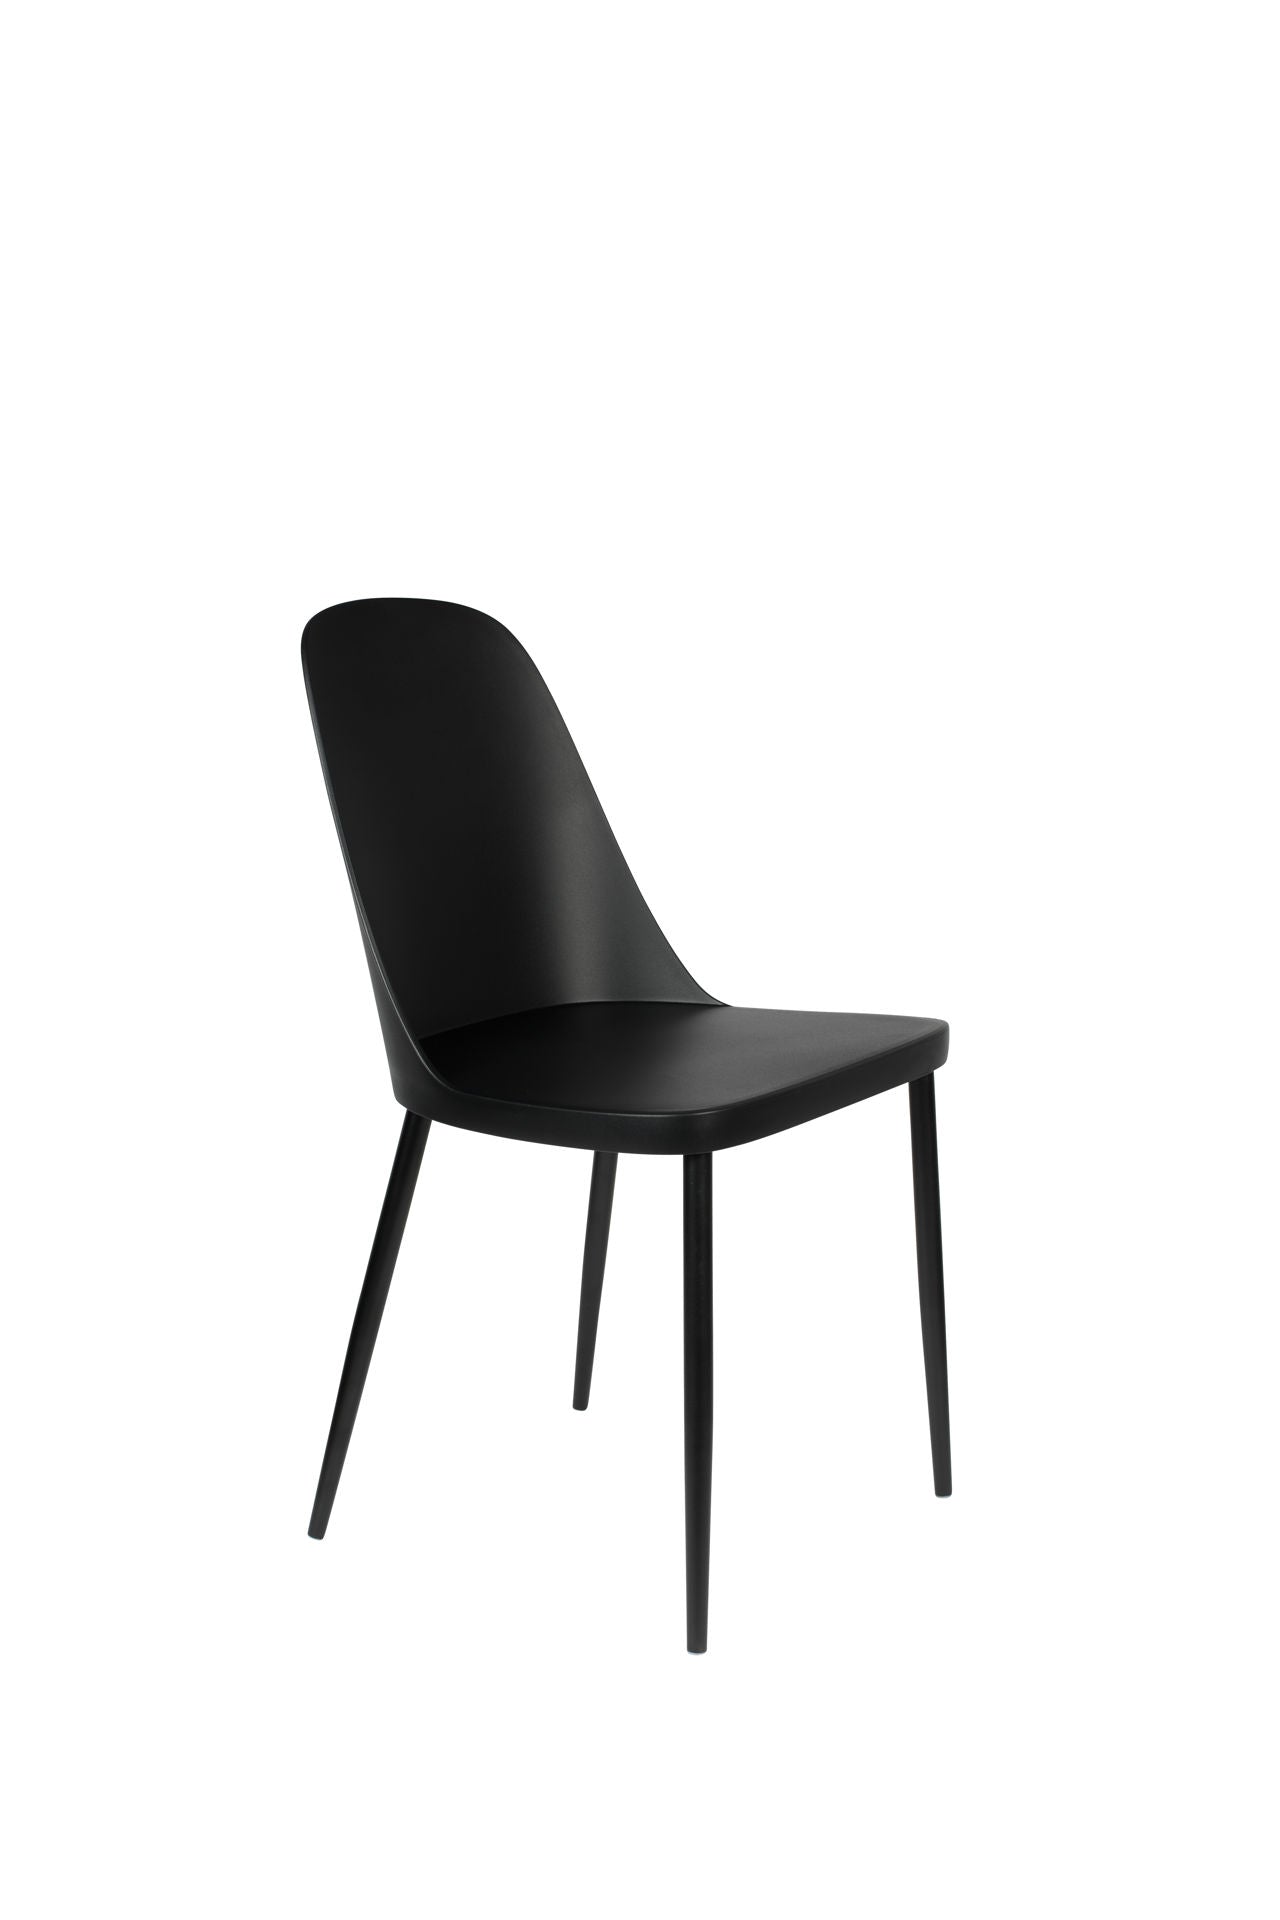 Nancy's Incline Village Chair - Scandinavian - Black - Polypropylene, Steel - 53.5 cm x 46 cm x 85 cm